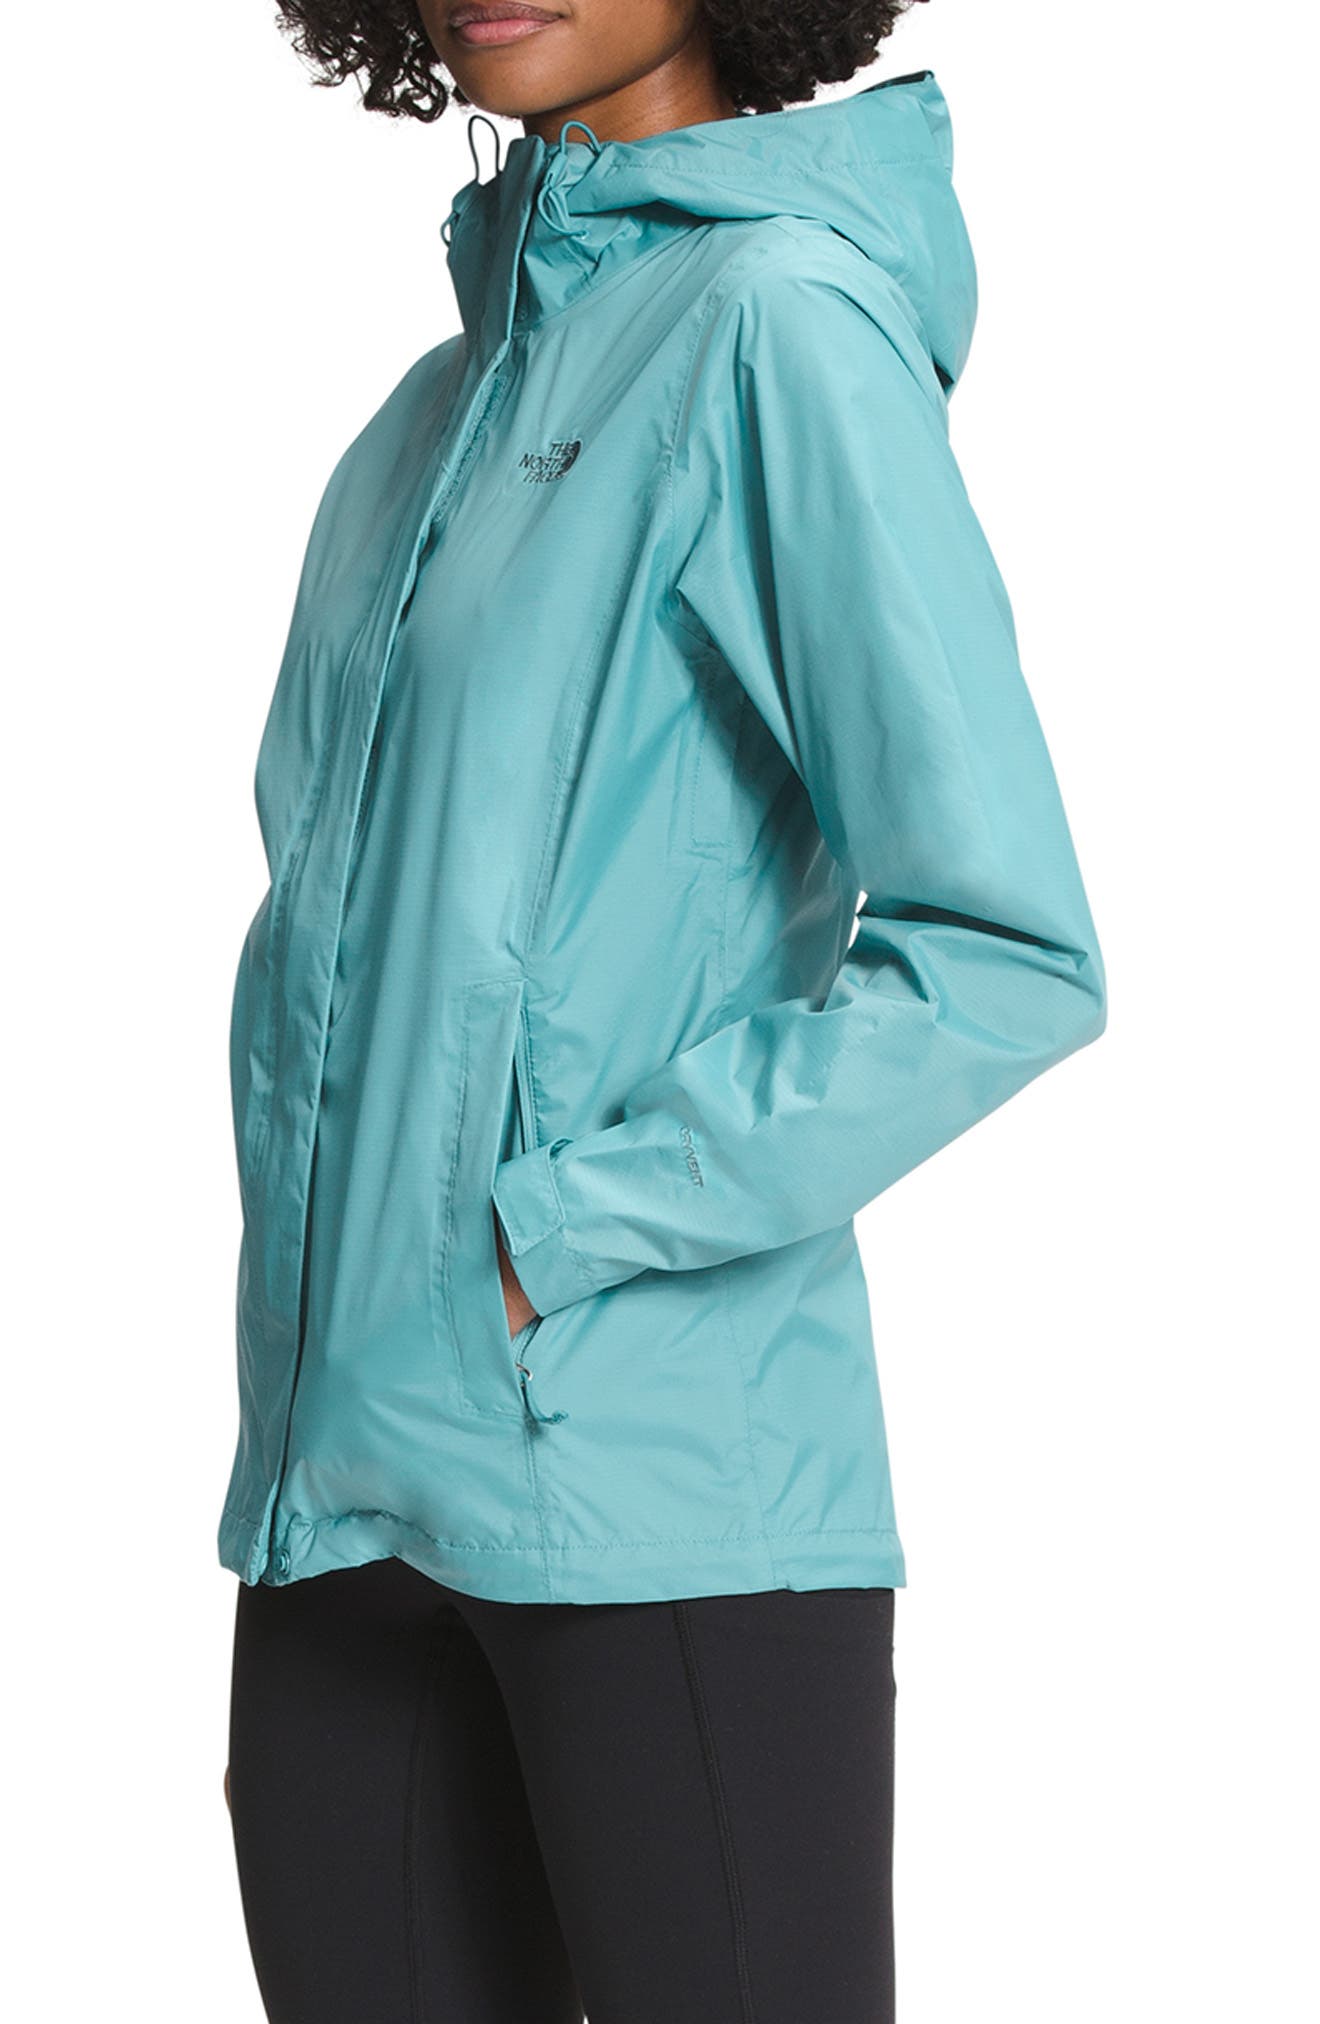 Deliveroo Jacket XL Green Waterproof NEW & SEALED